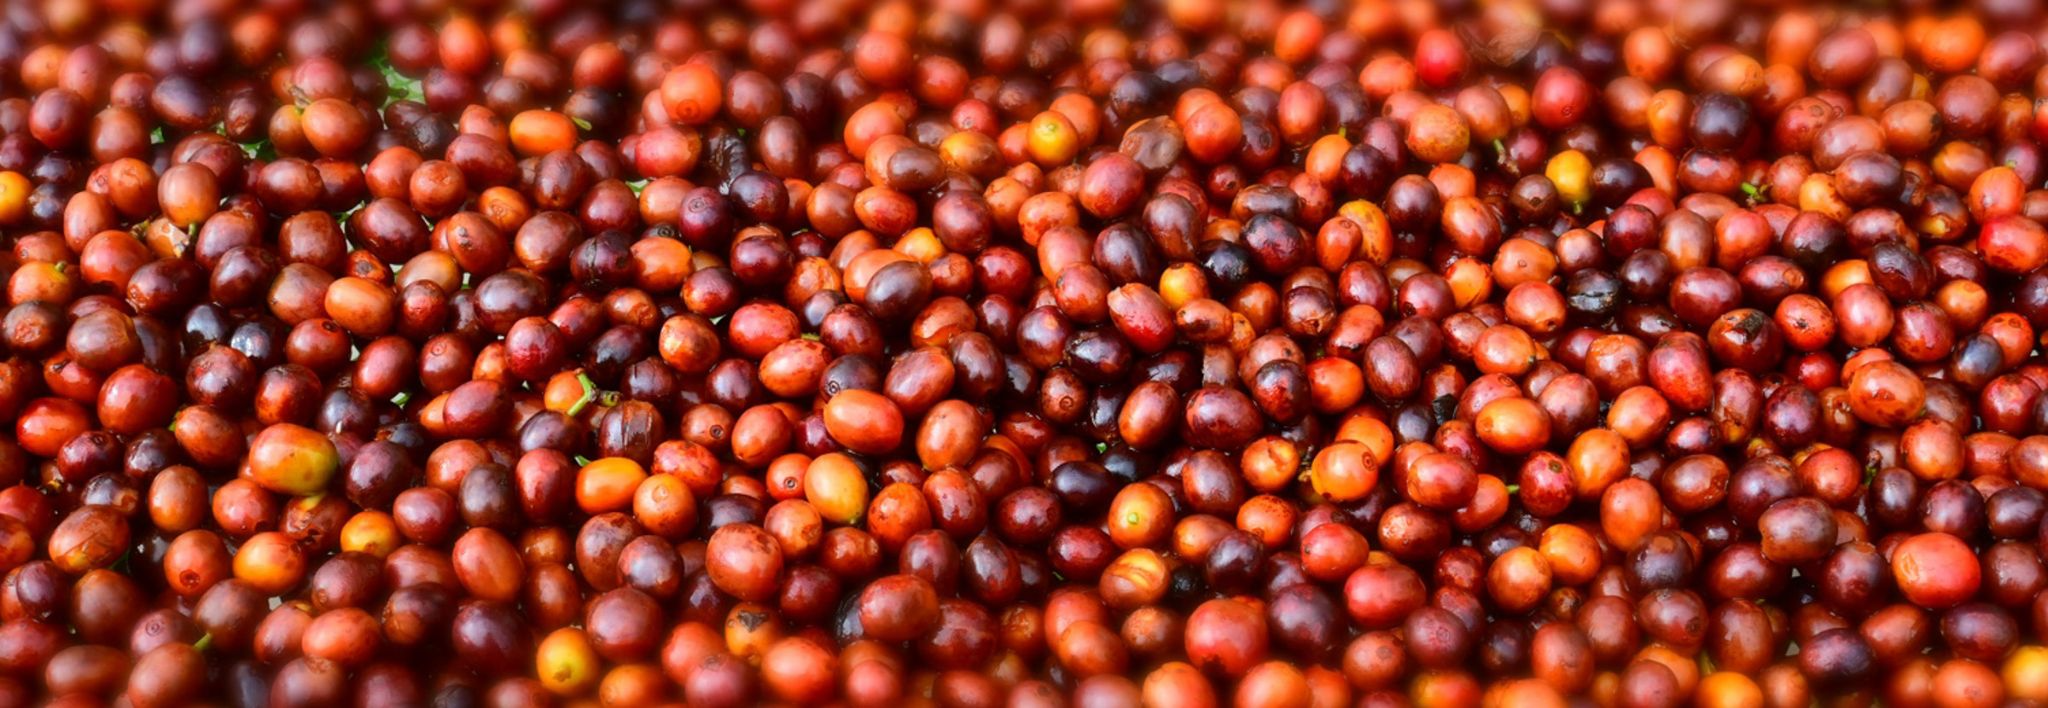 Ripe coffee cherries on a coffee farm.